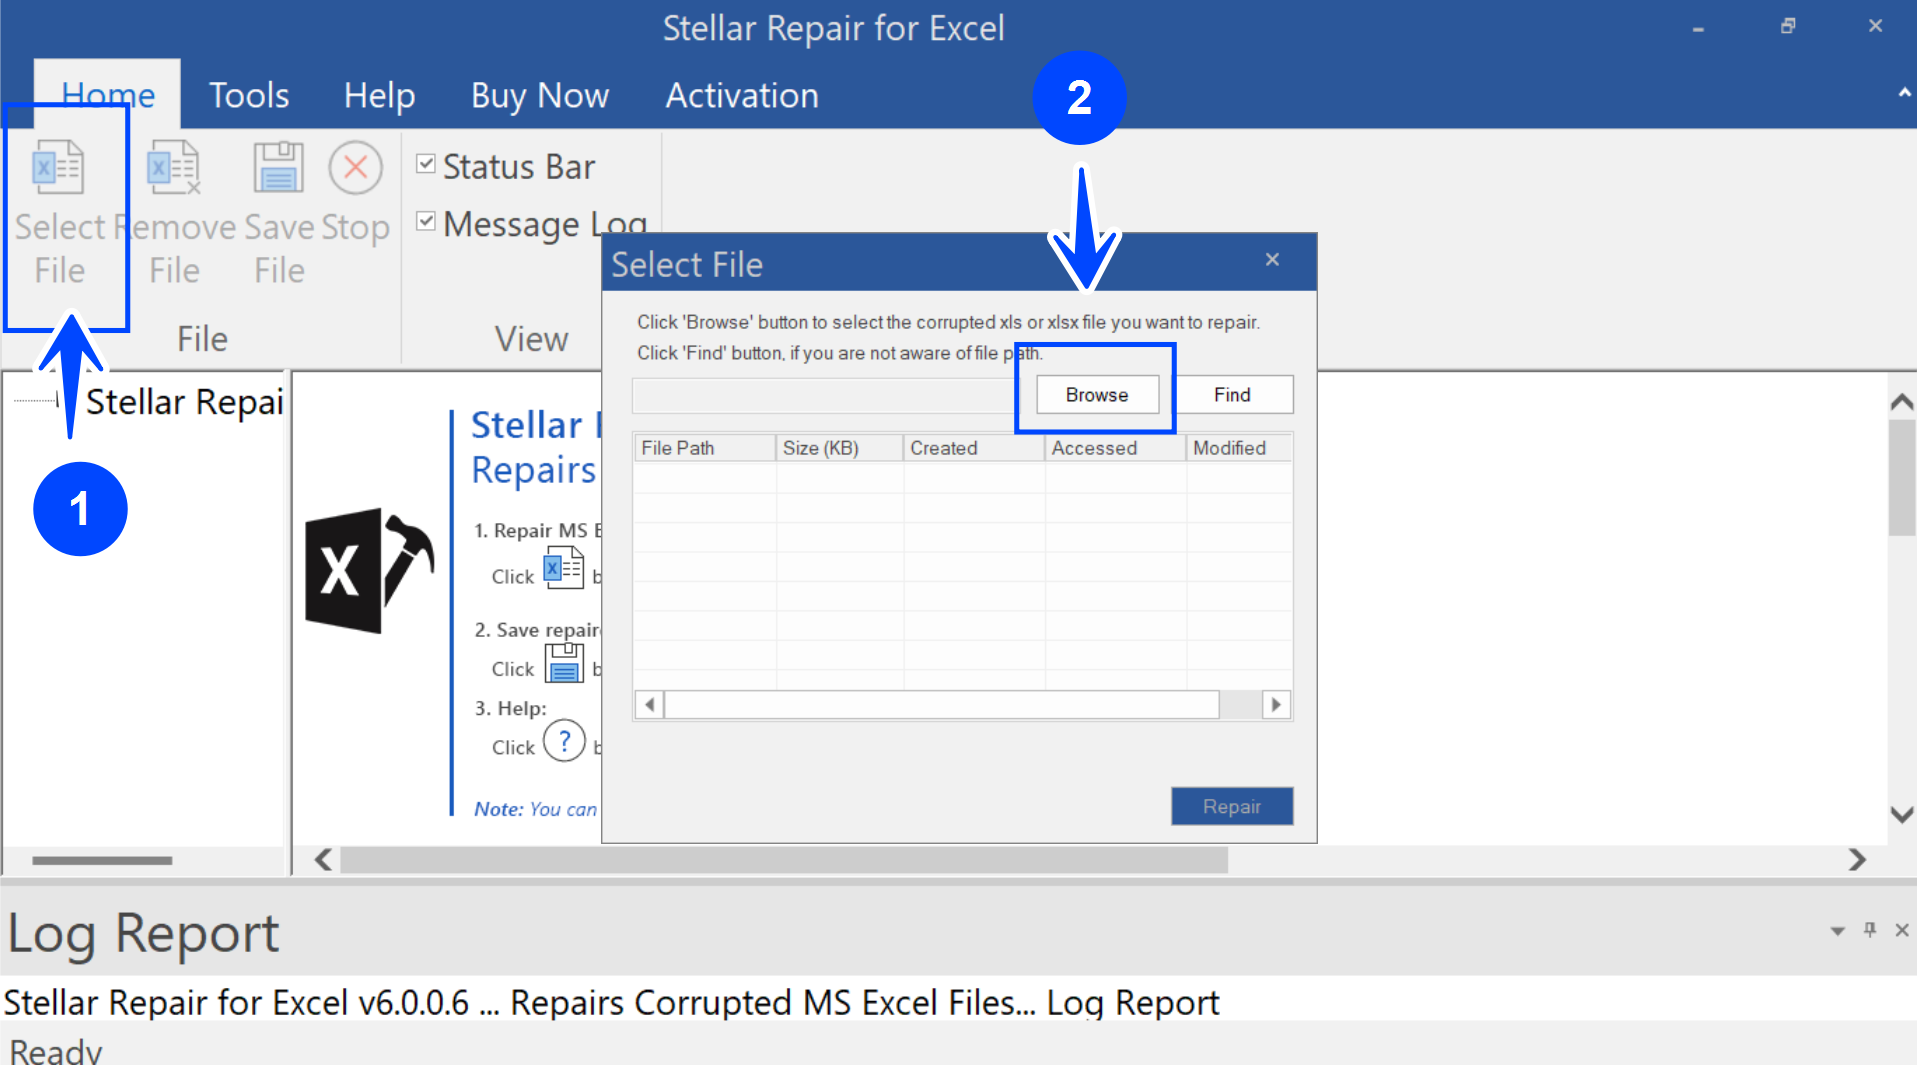 Stellar Repair Excel Tool UI